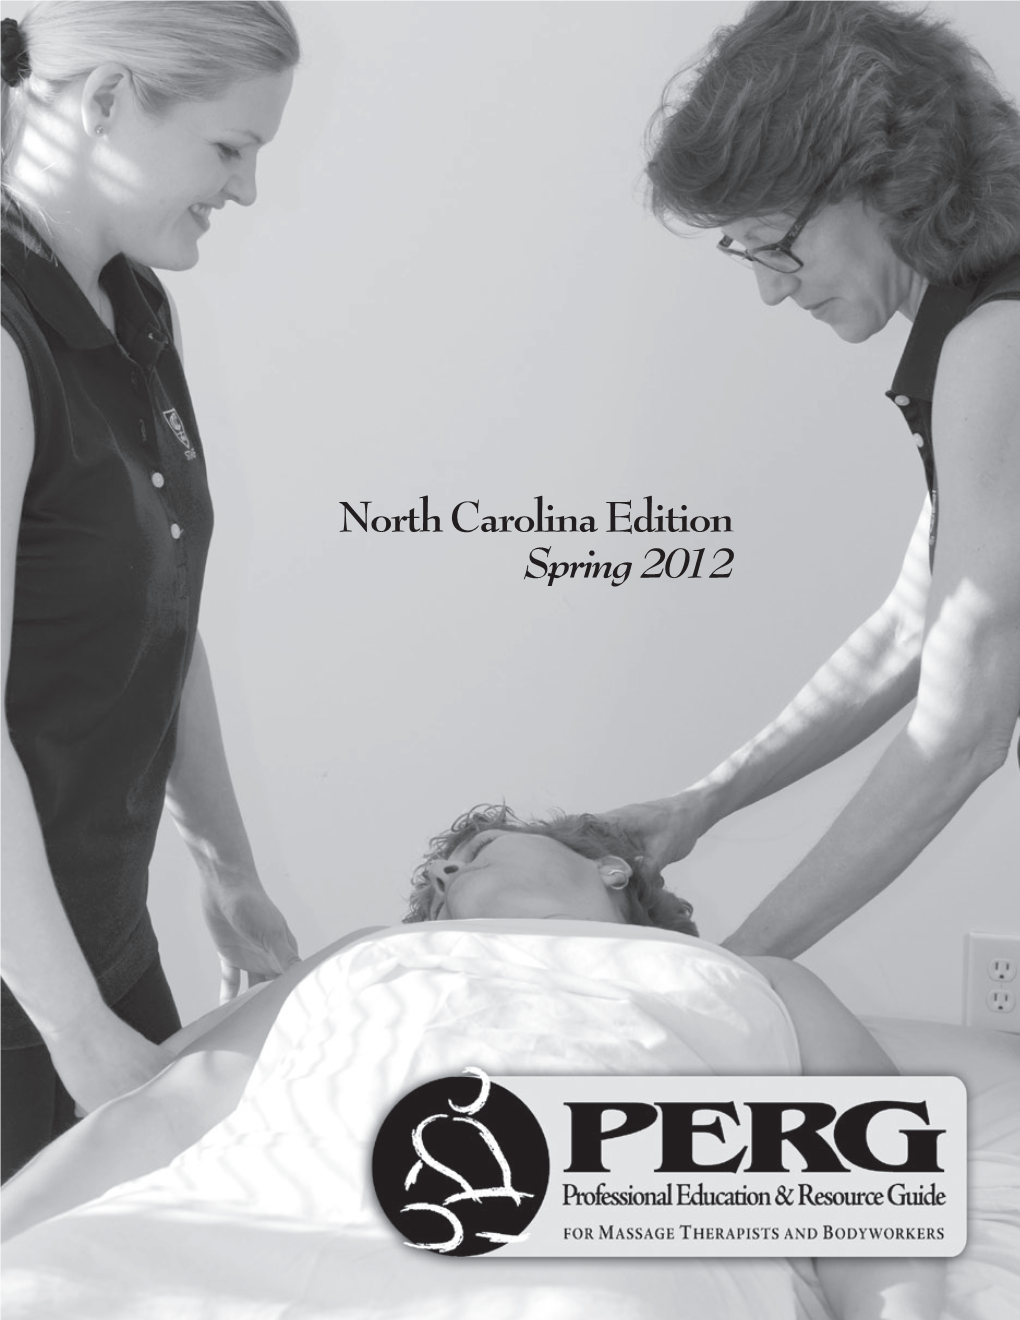 North Carolina Edition Spring 2012 Cover Photo by David Kilian